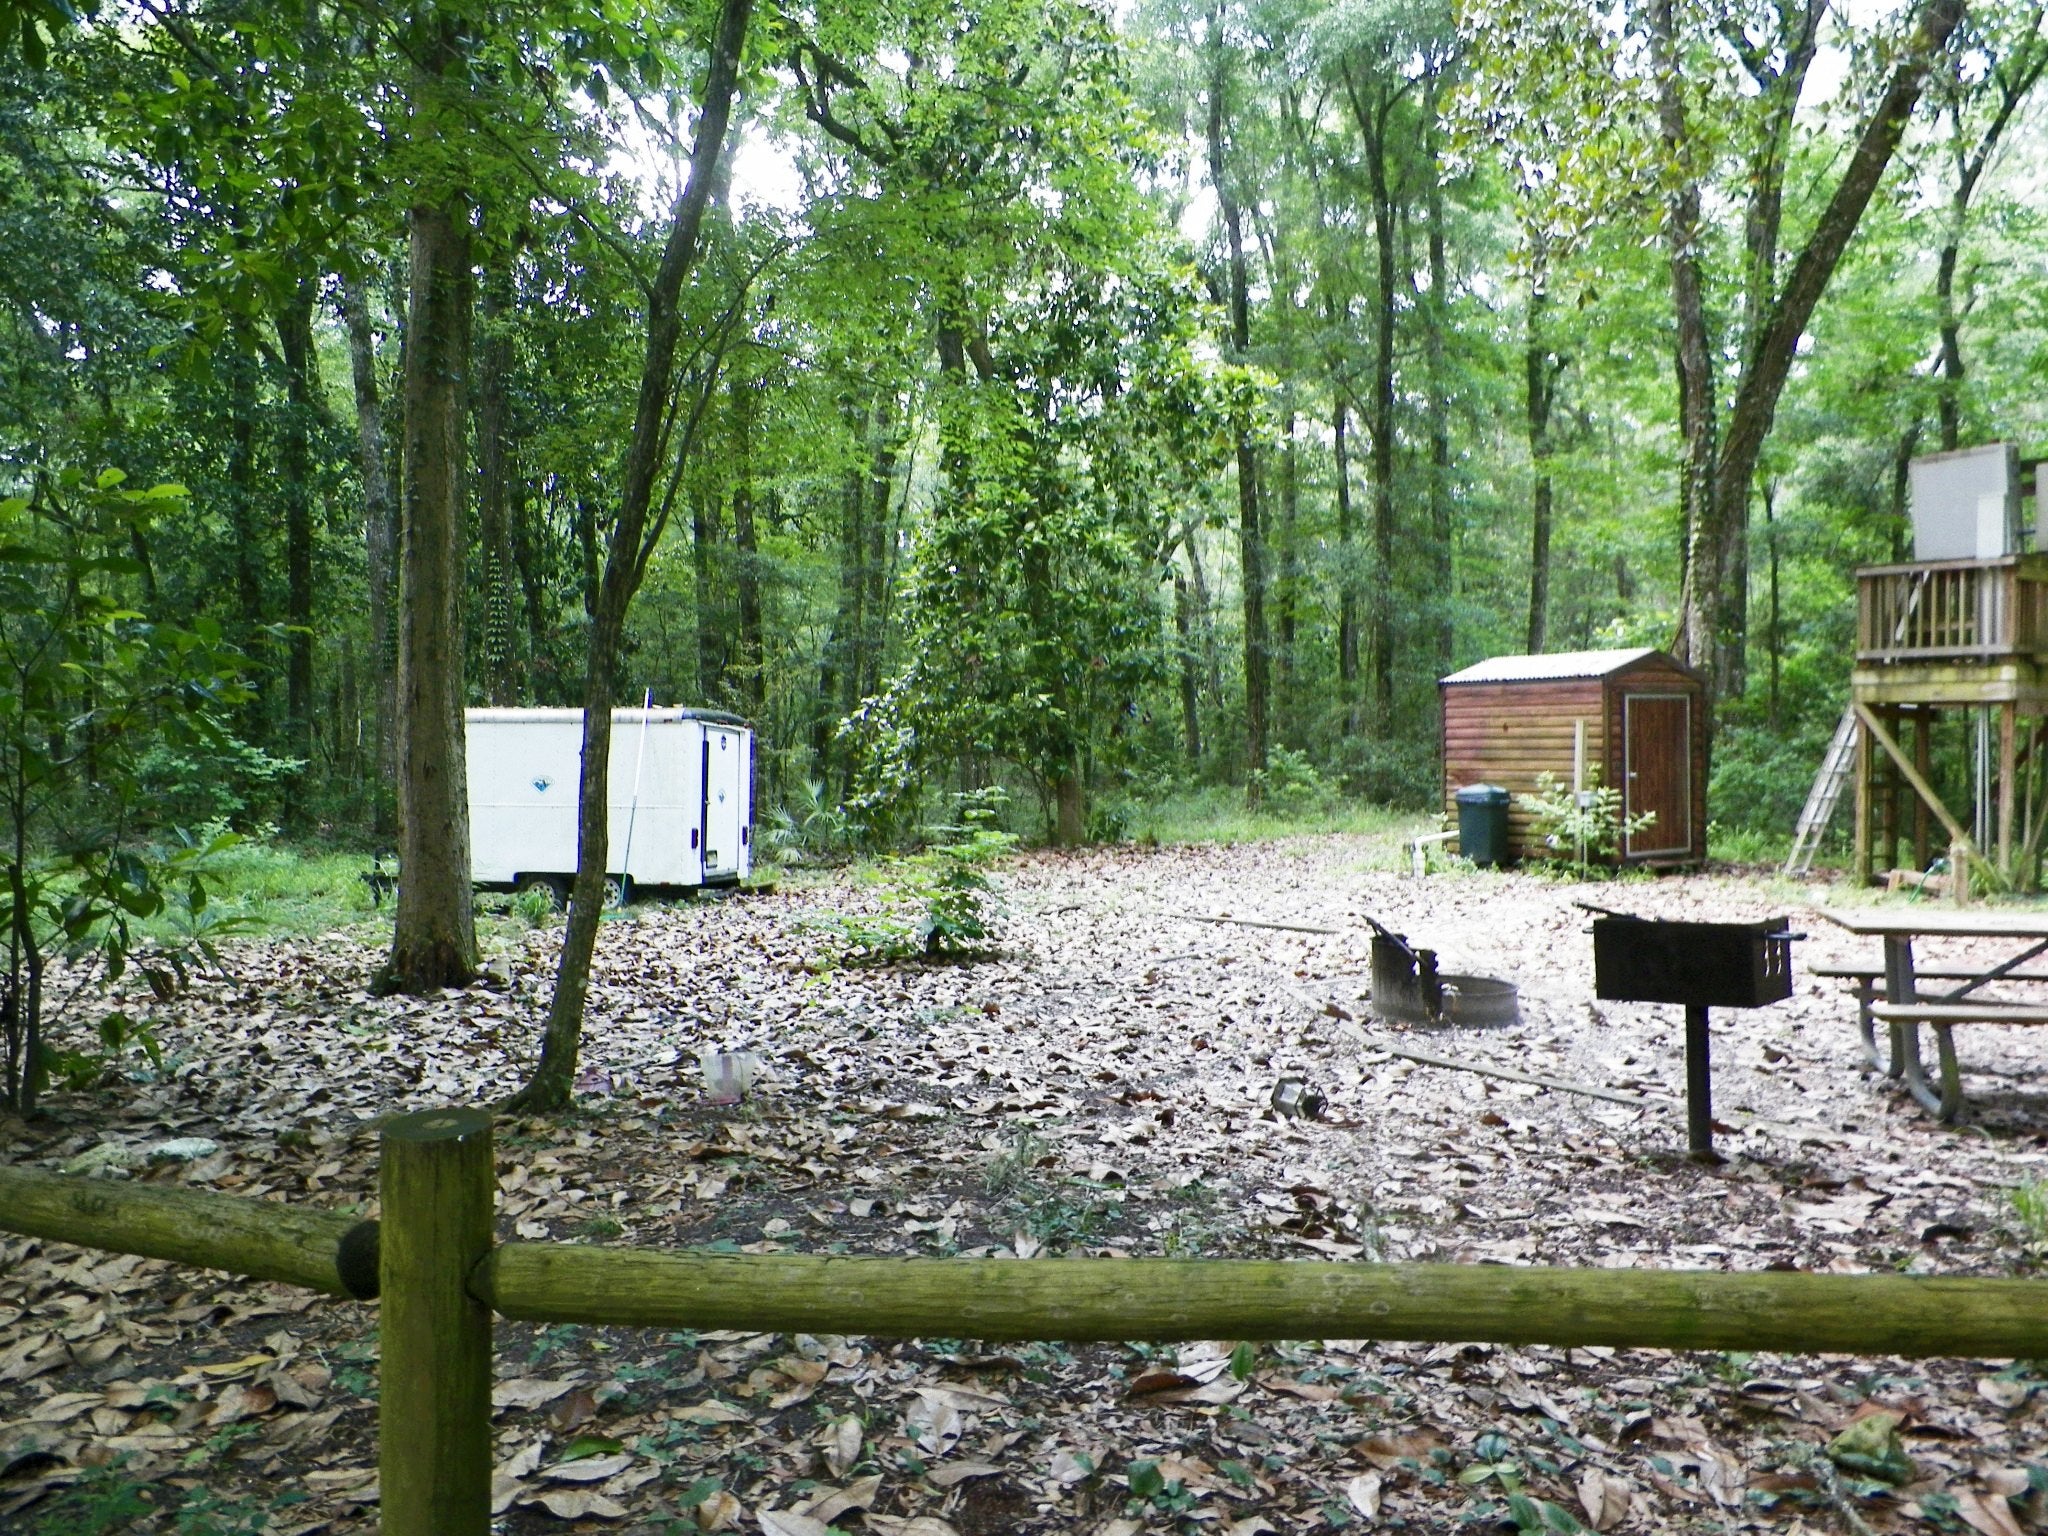 Camp host site